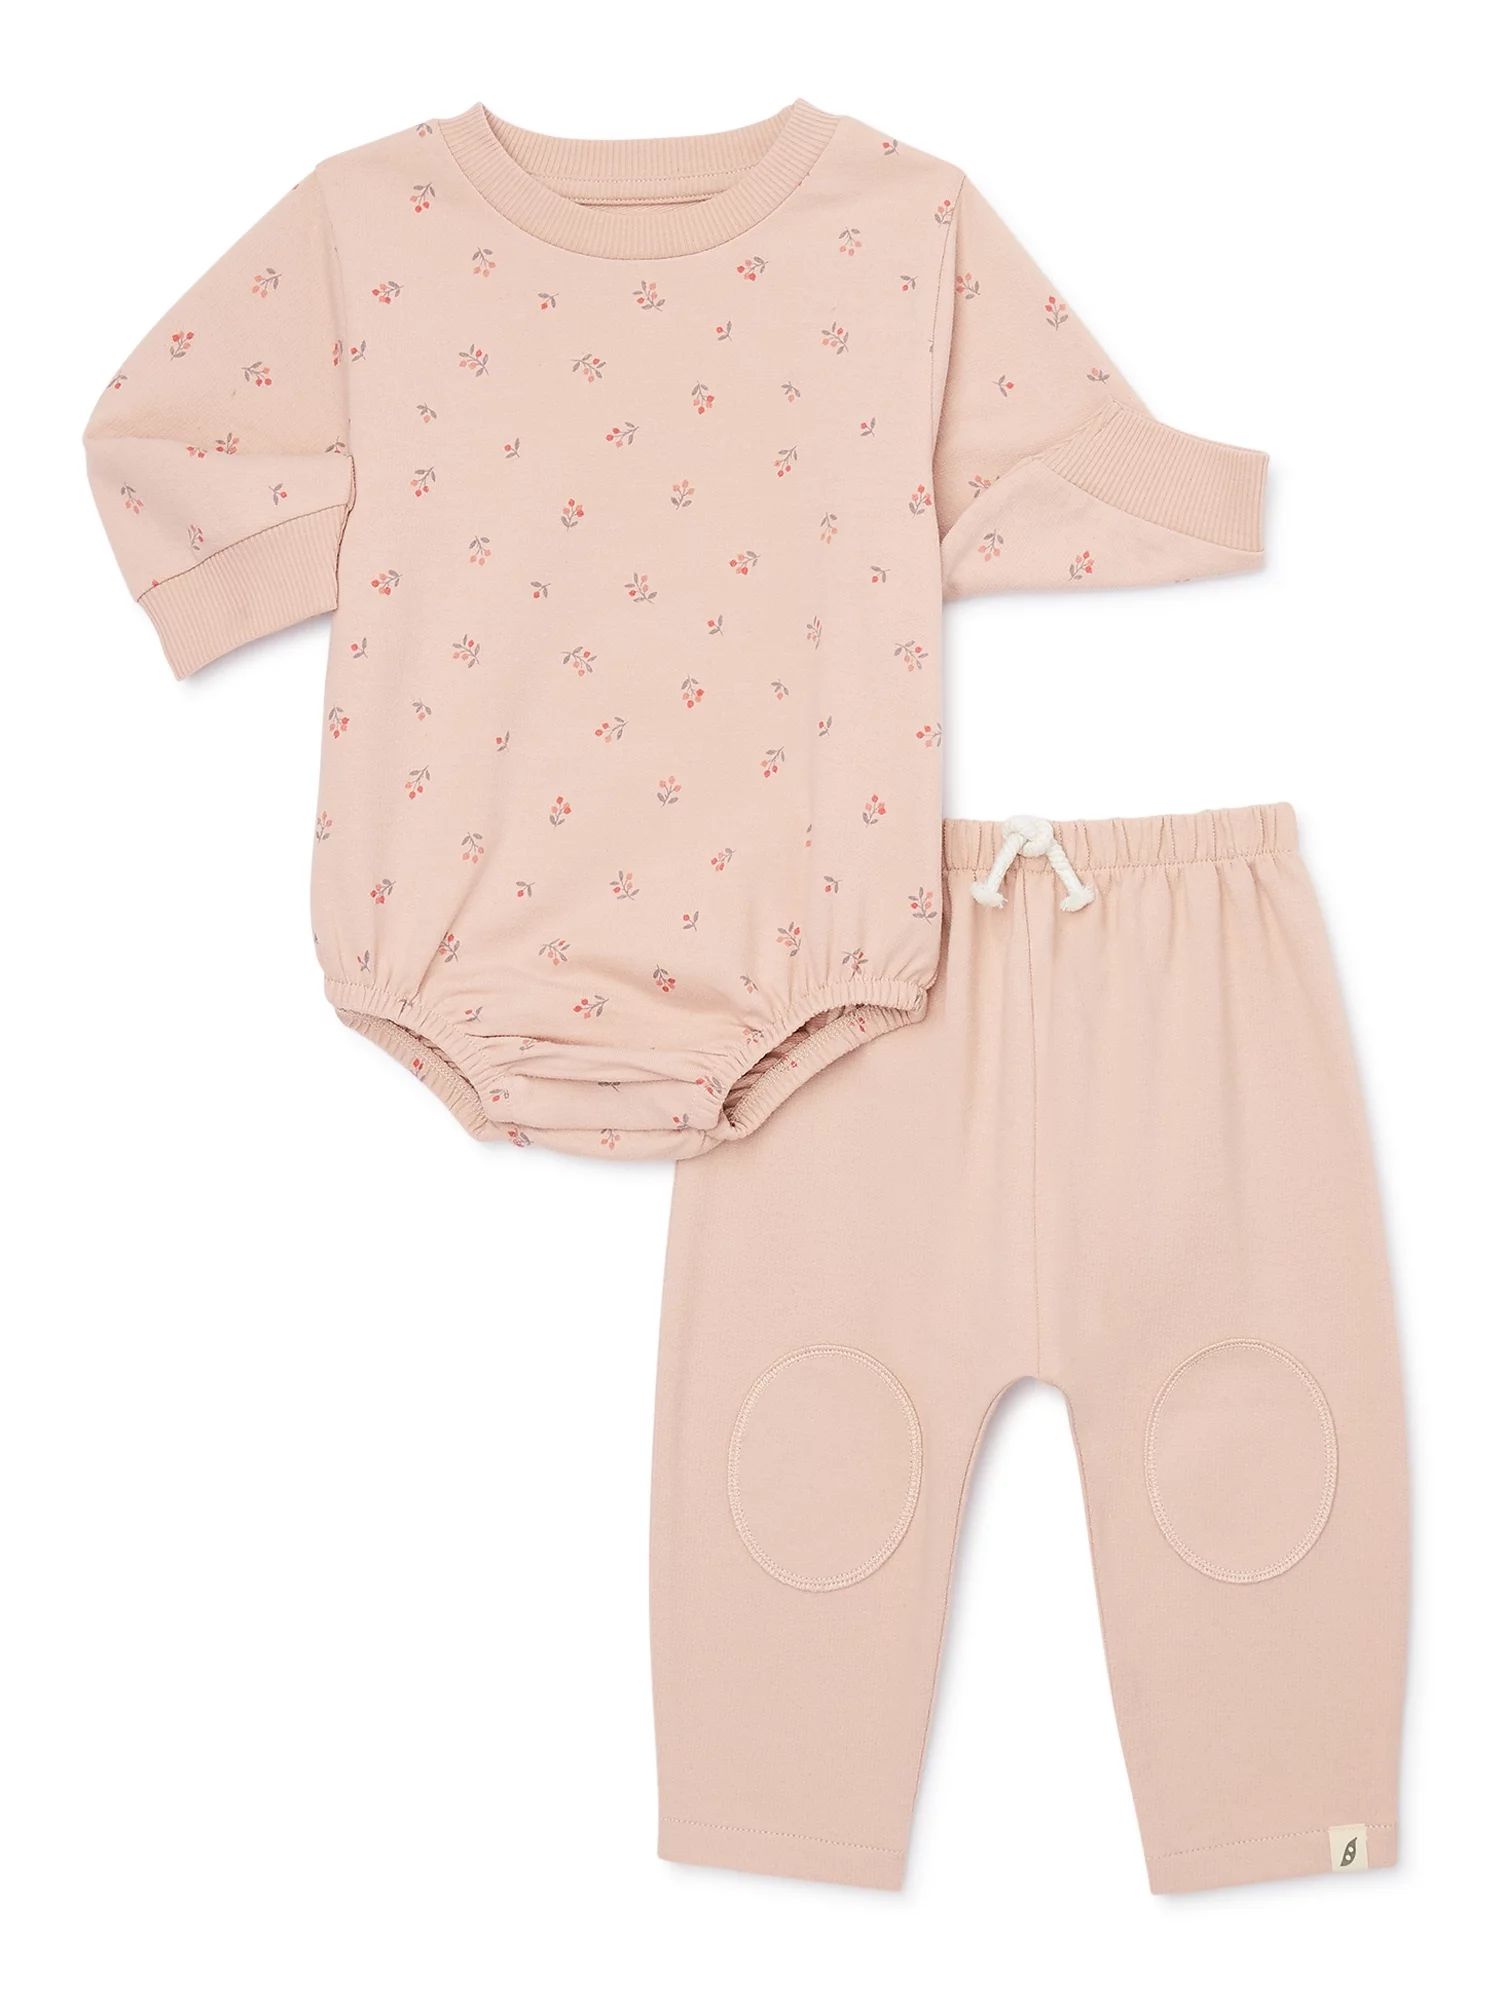 easy-peasy Baby Sweatshirt Bodysuit and Pants Outfit Set, 2-Piece, Sizes 0-24M | Walmart (US)